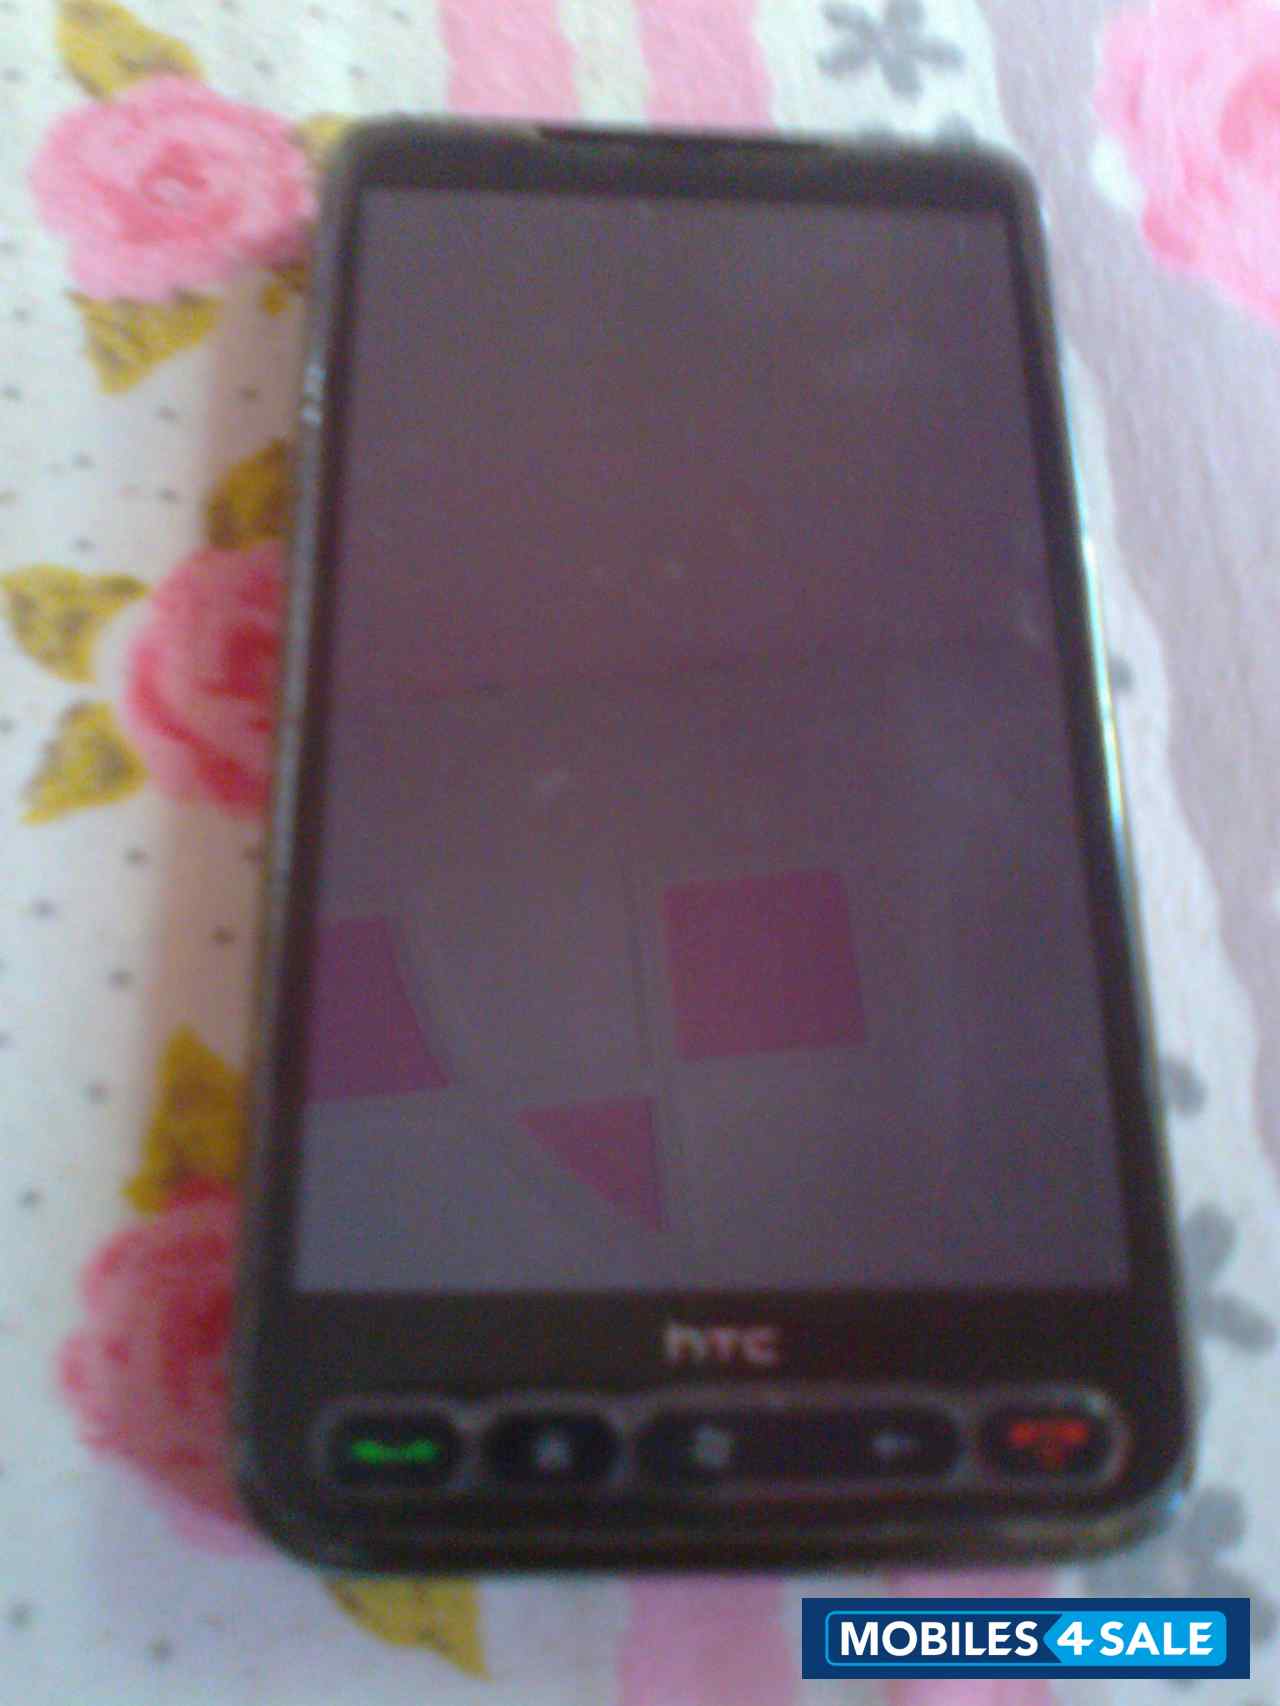 Black HTC Nexus